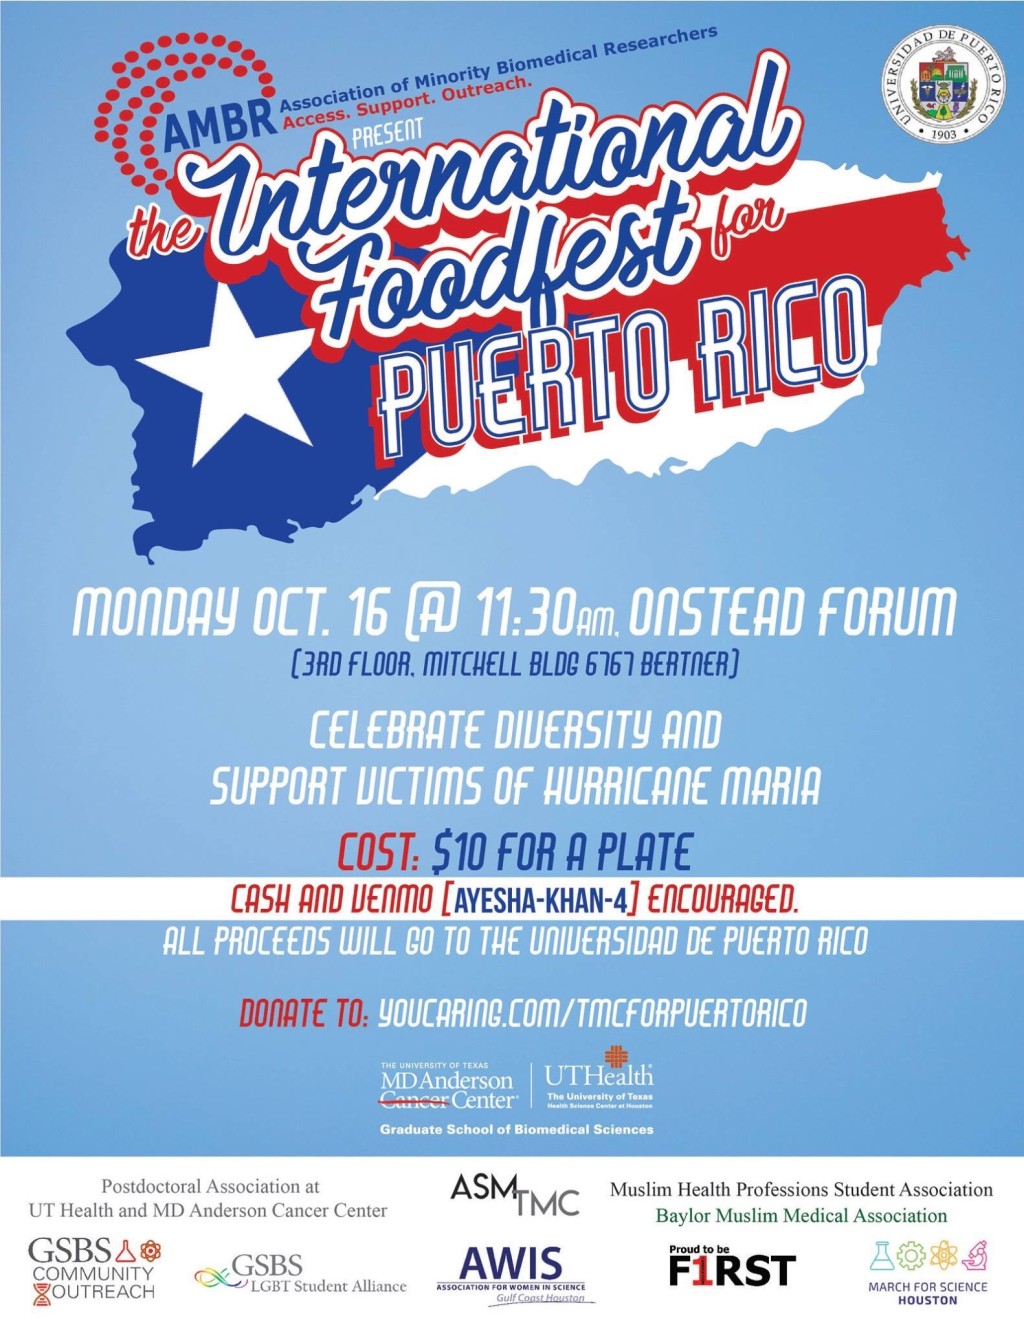 International Foodfest for Puerto Rico